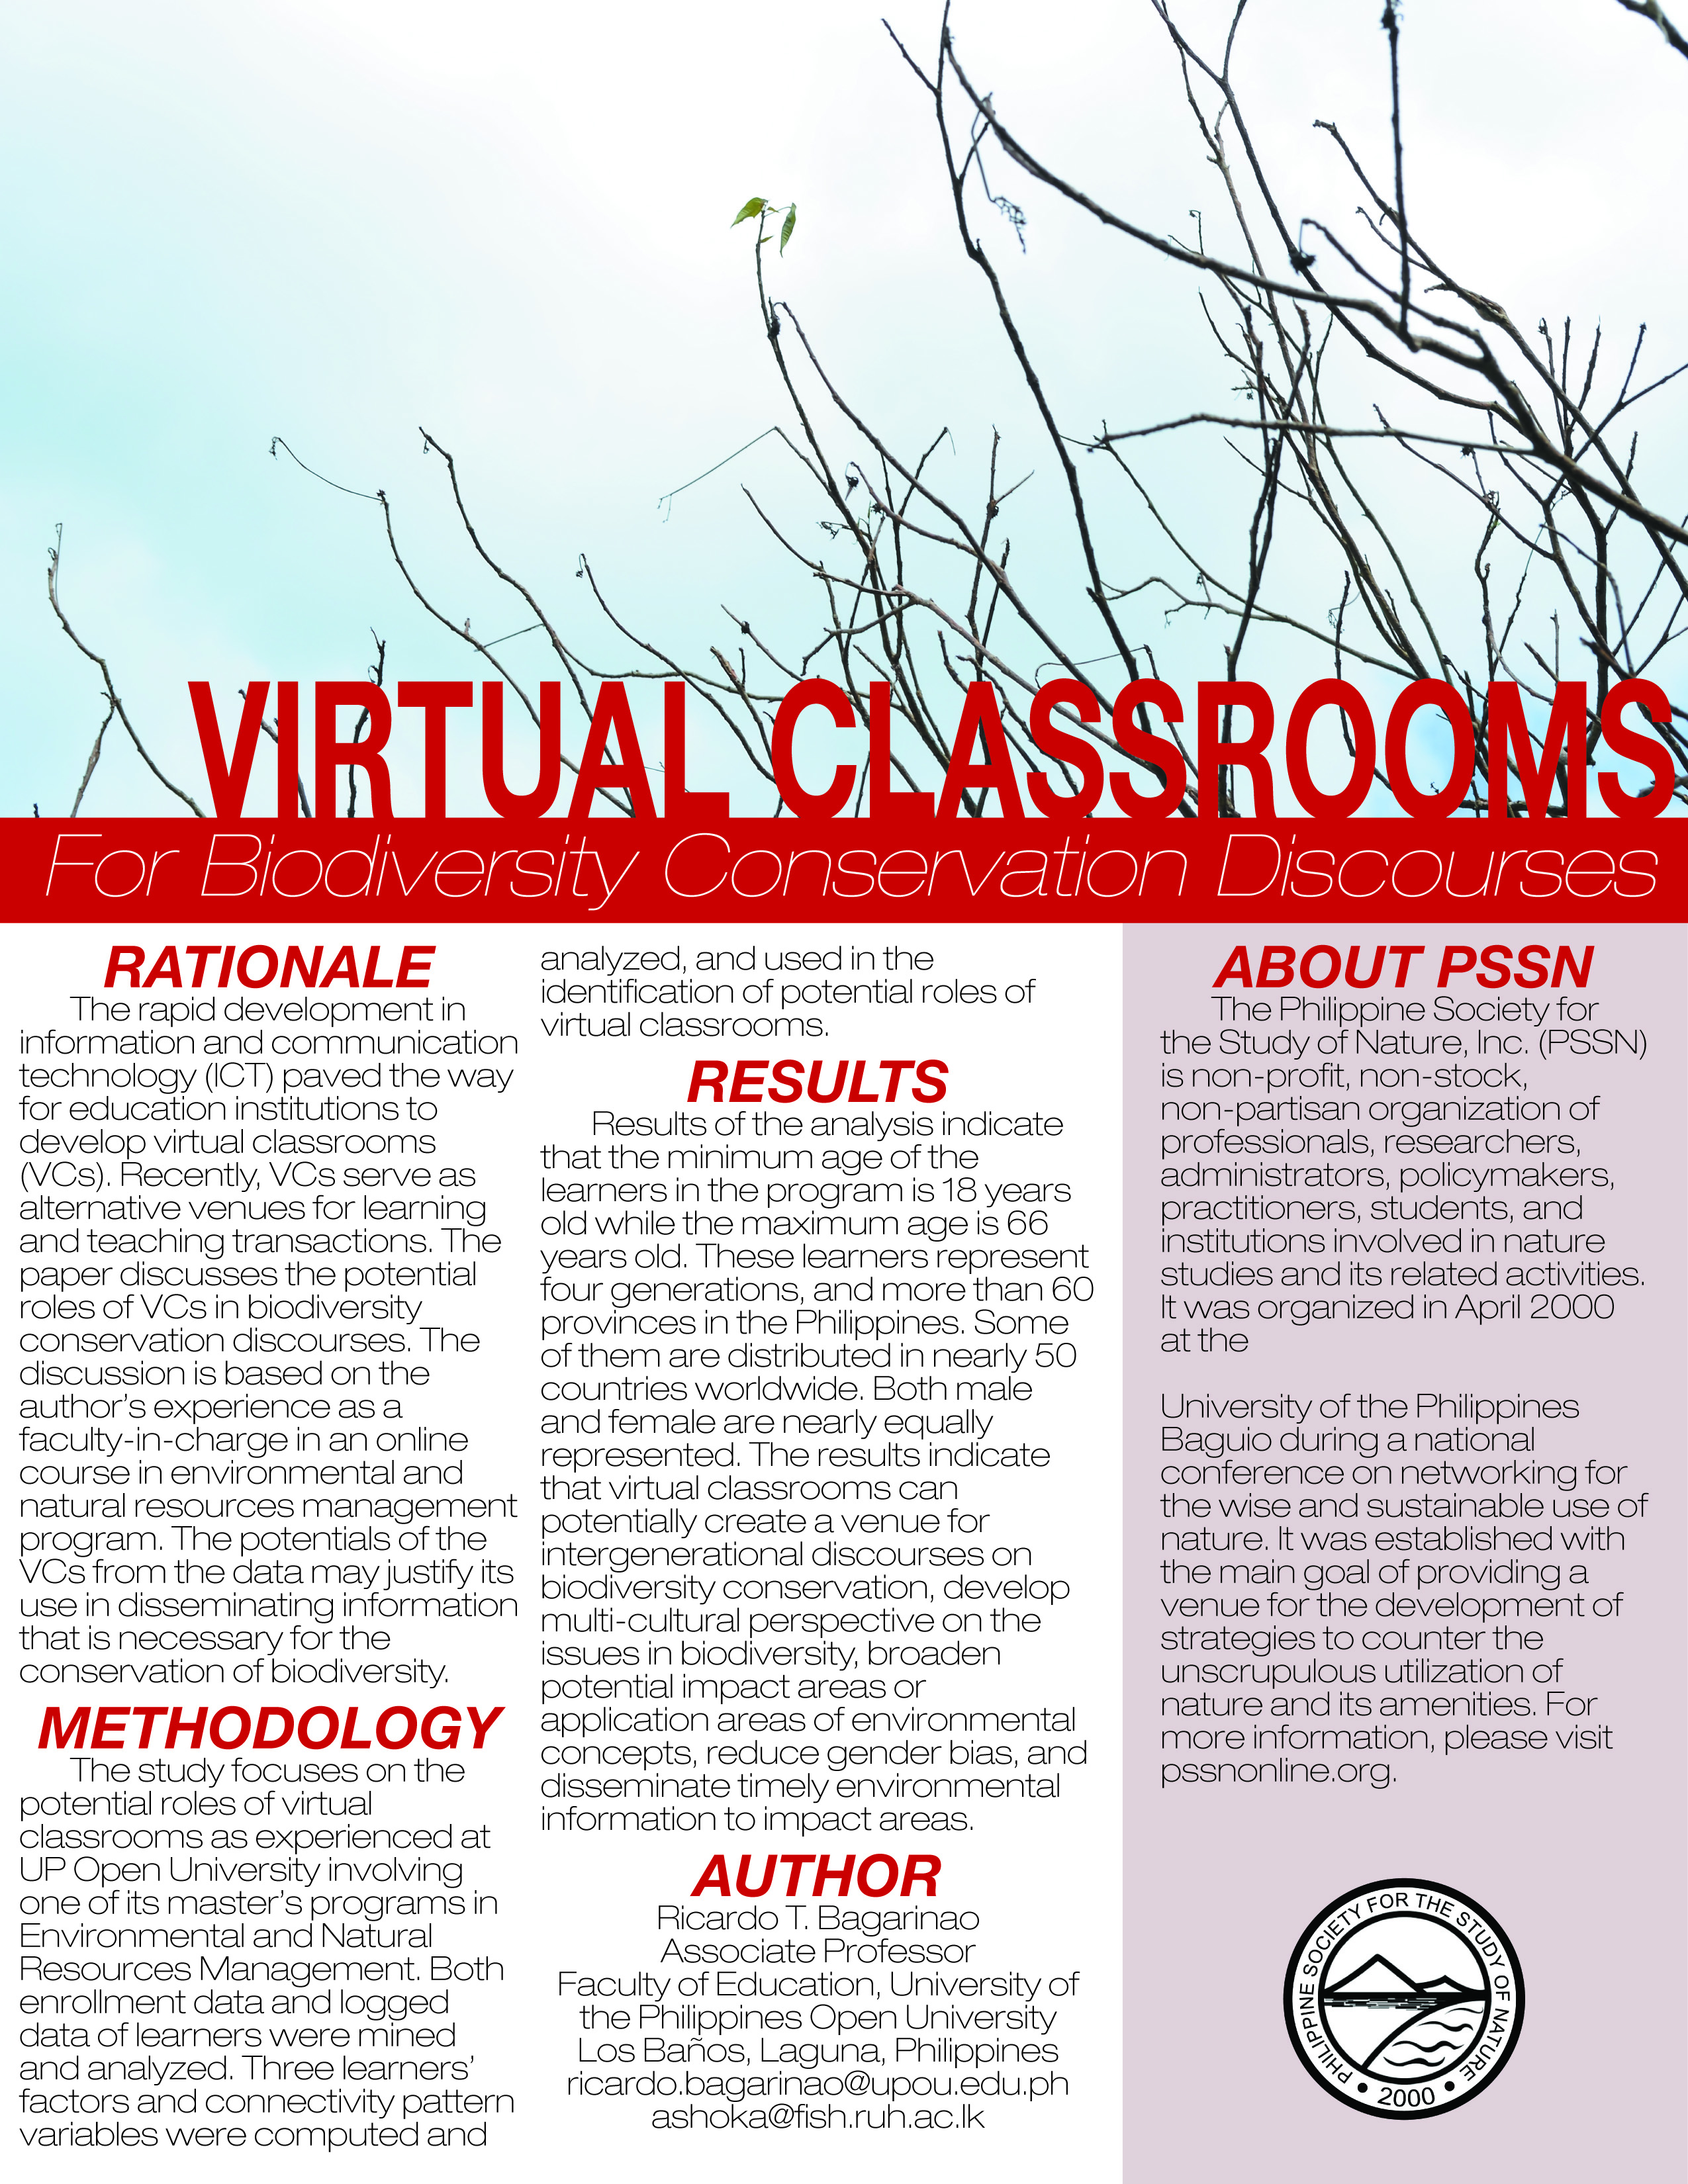 Virtual Classrooms for Biodiversity Conservation Discourse, a fact sheet